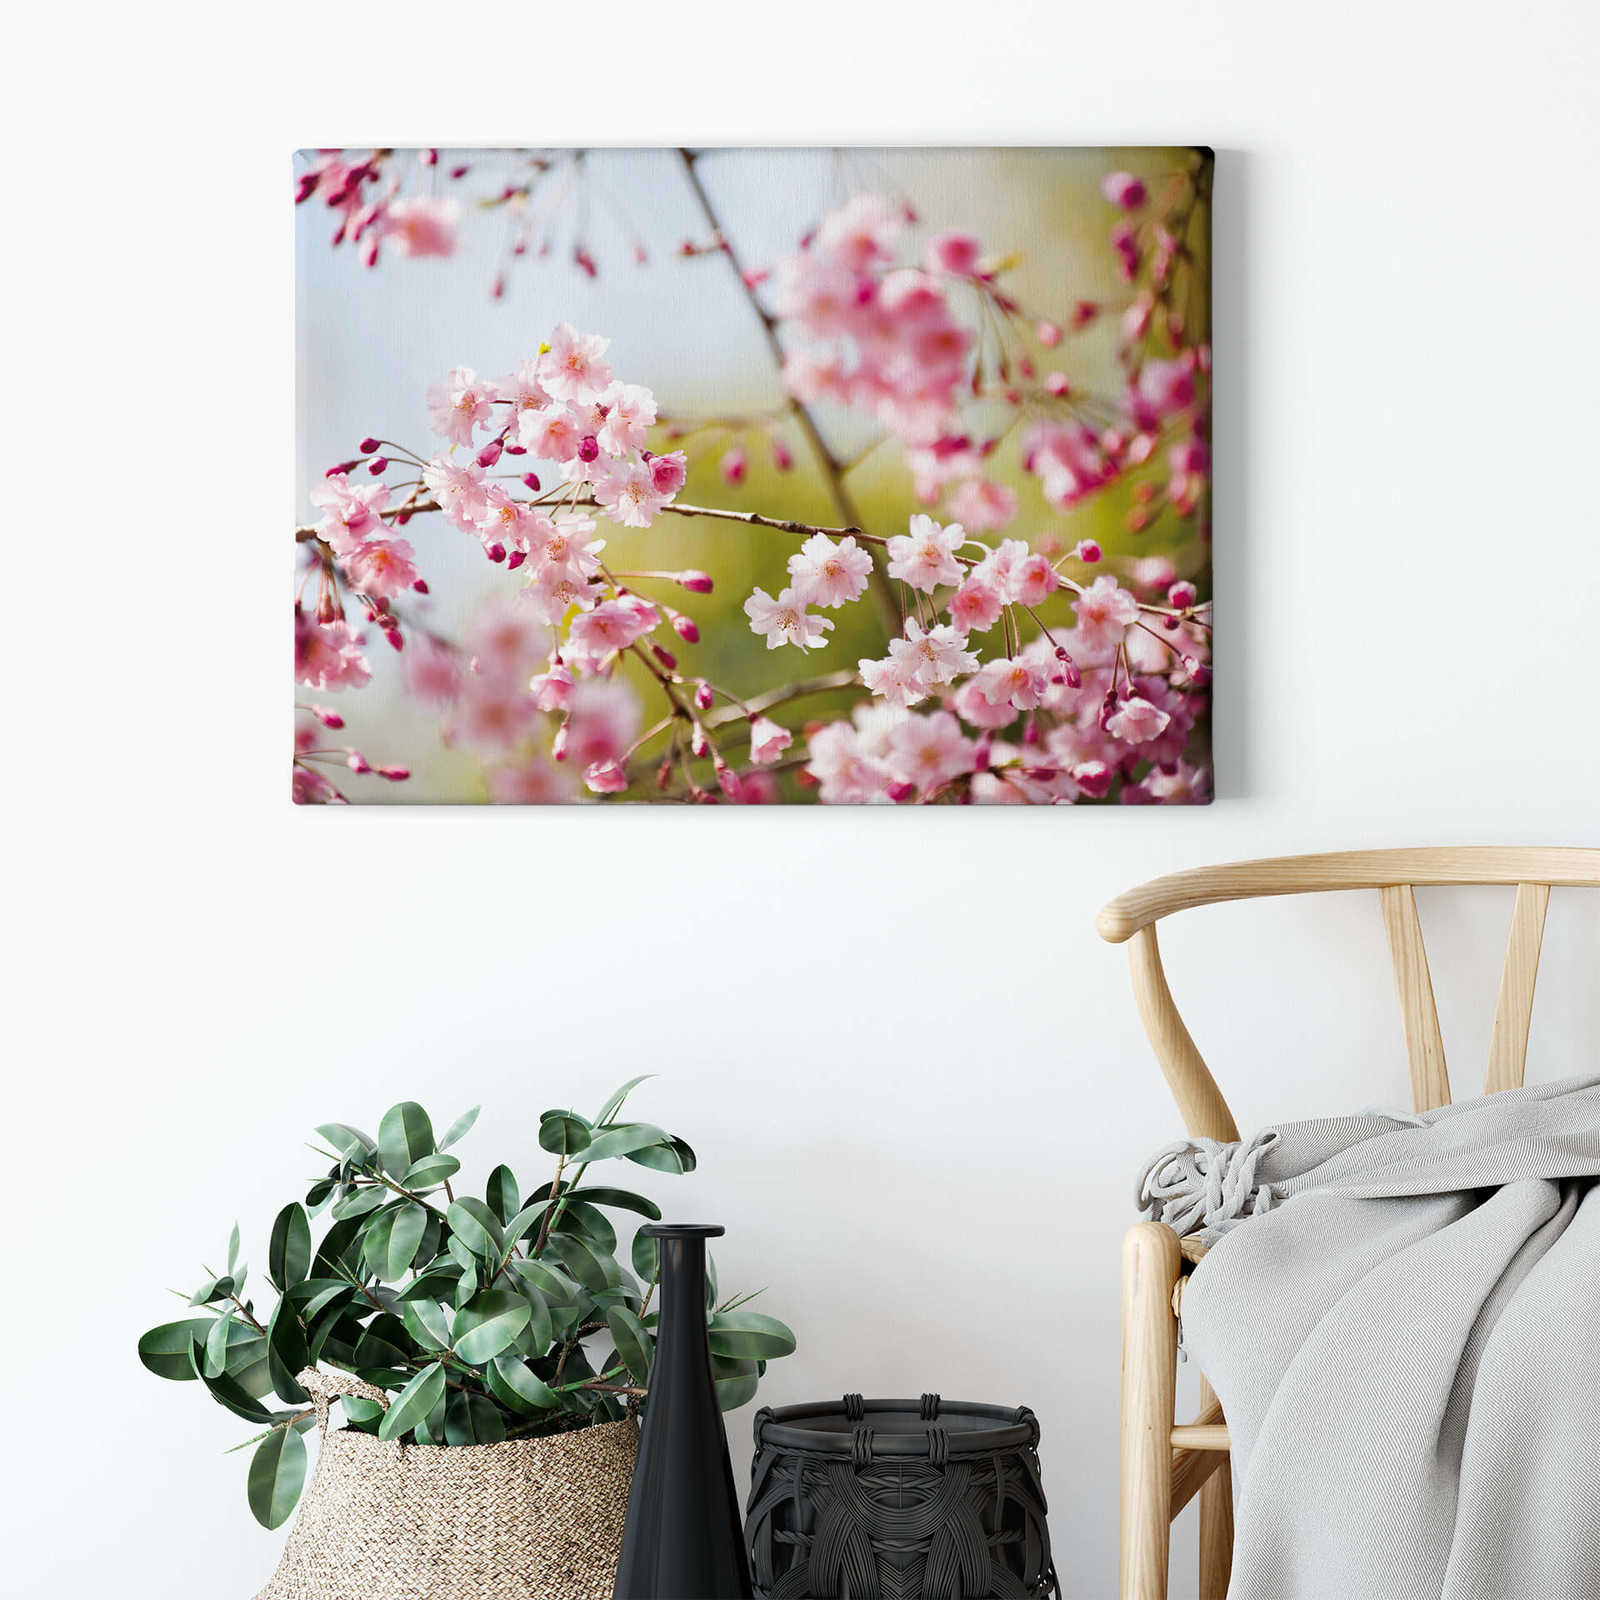             Natur Leinwandbild mit Kirschblüten Motiv – 0,70 m x 0,50 m
        